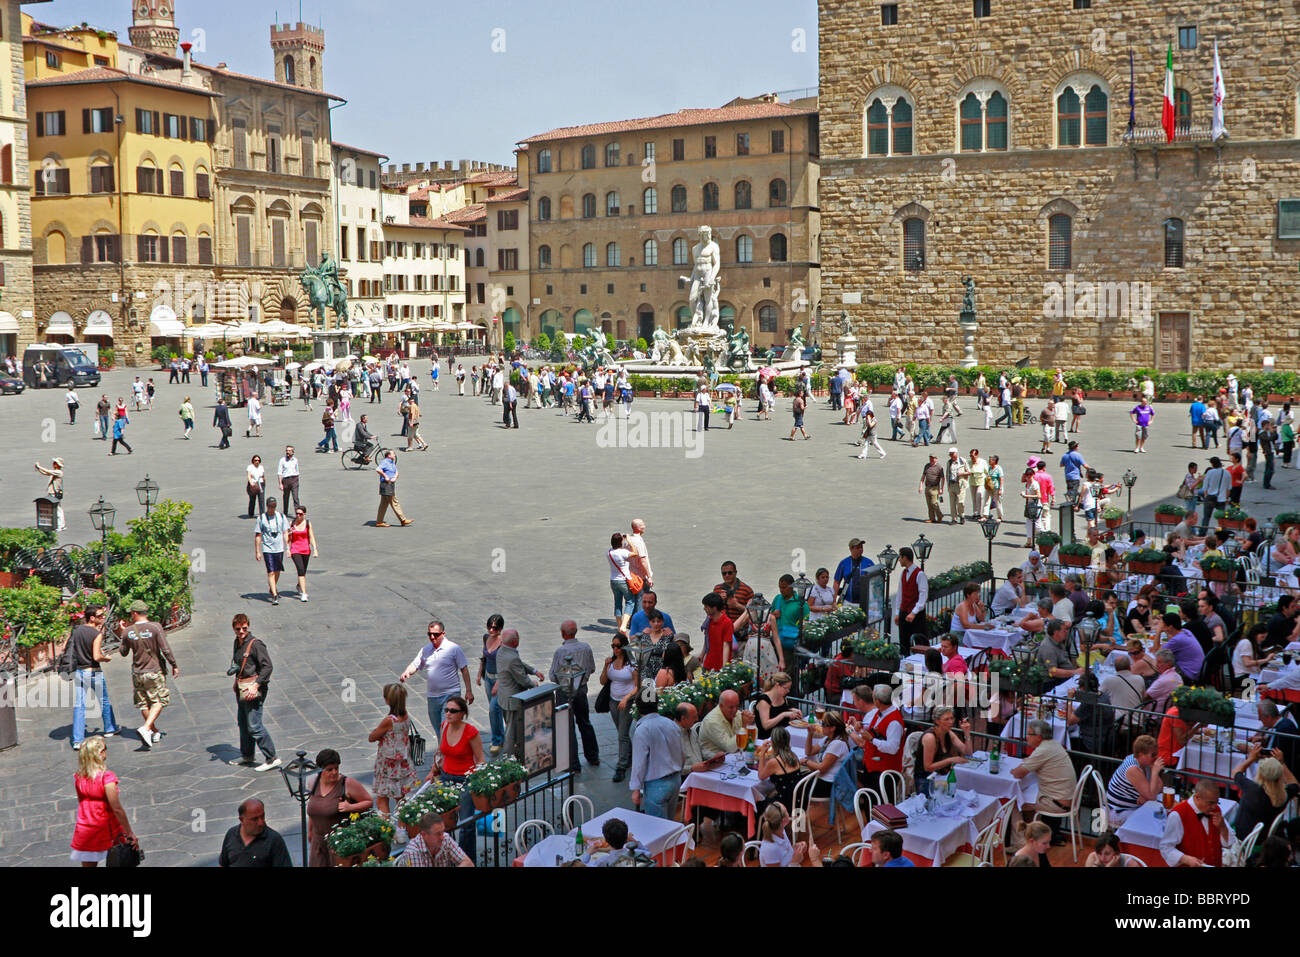 Dining al fresco in the famous Piazza della Signoria in Florence Tuscany,Italy Stock Photo